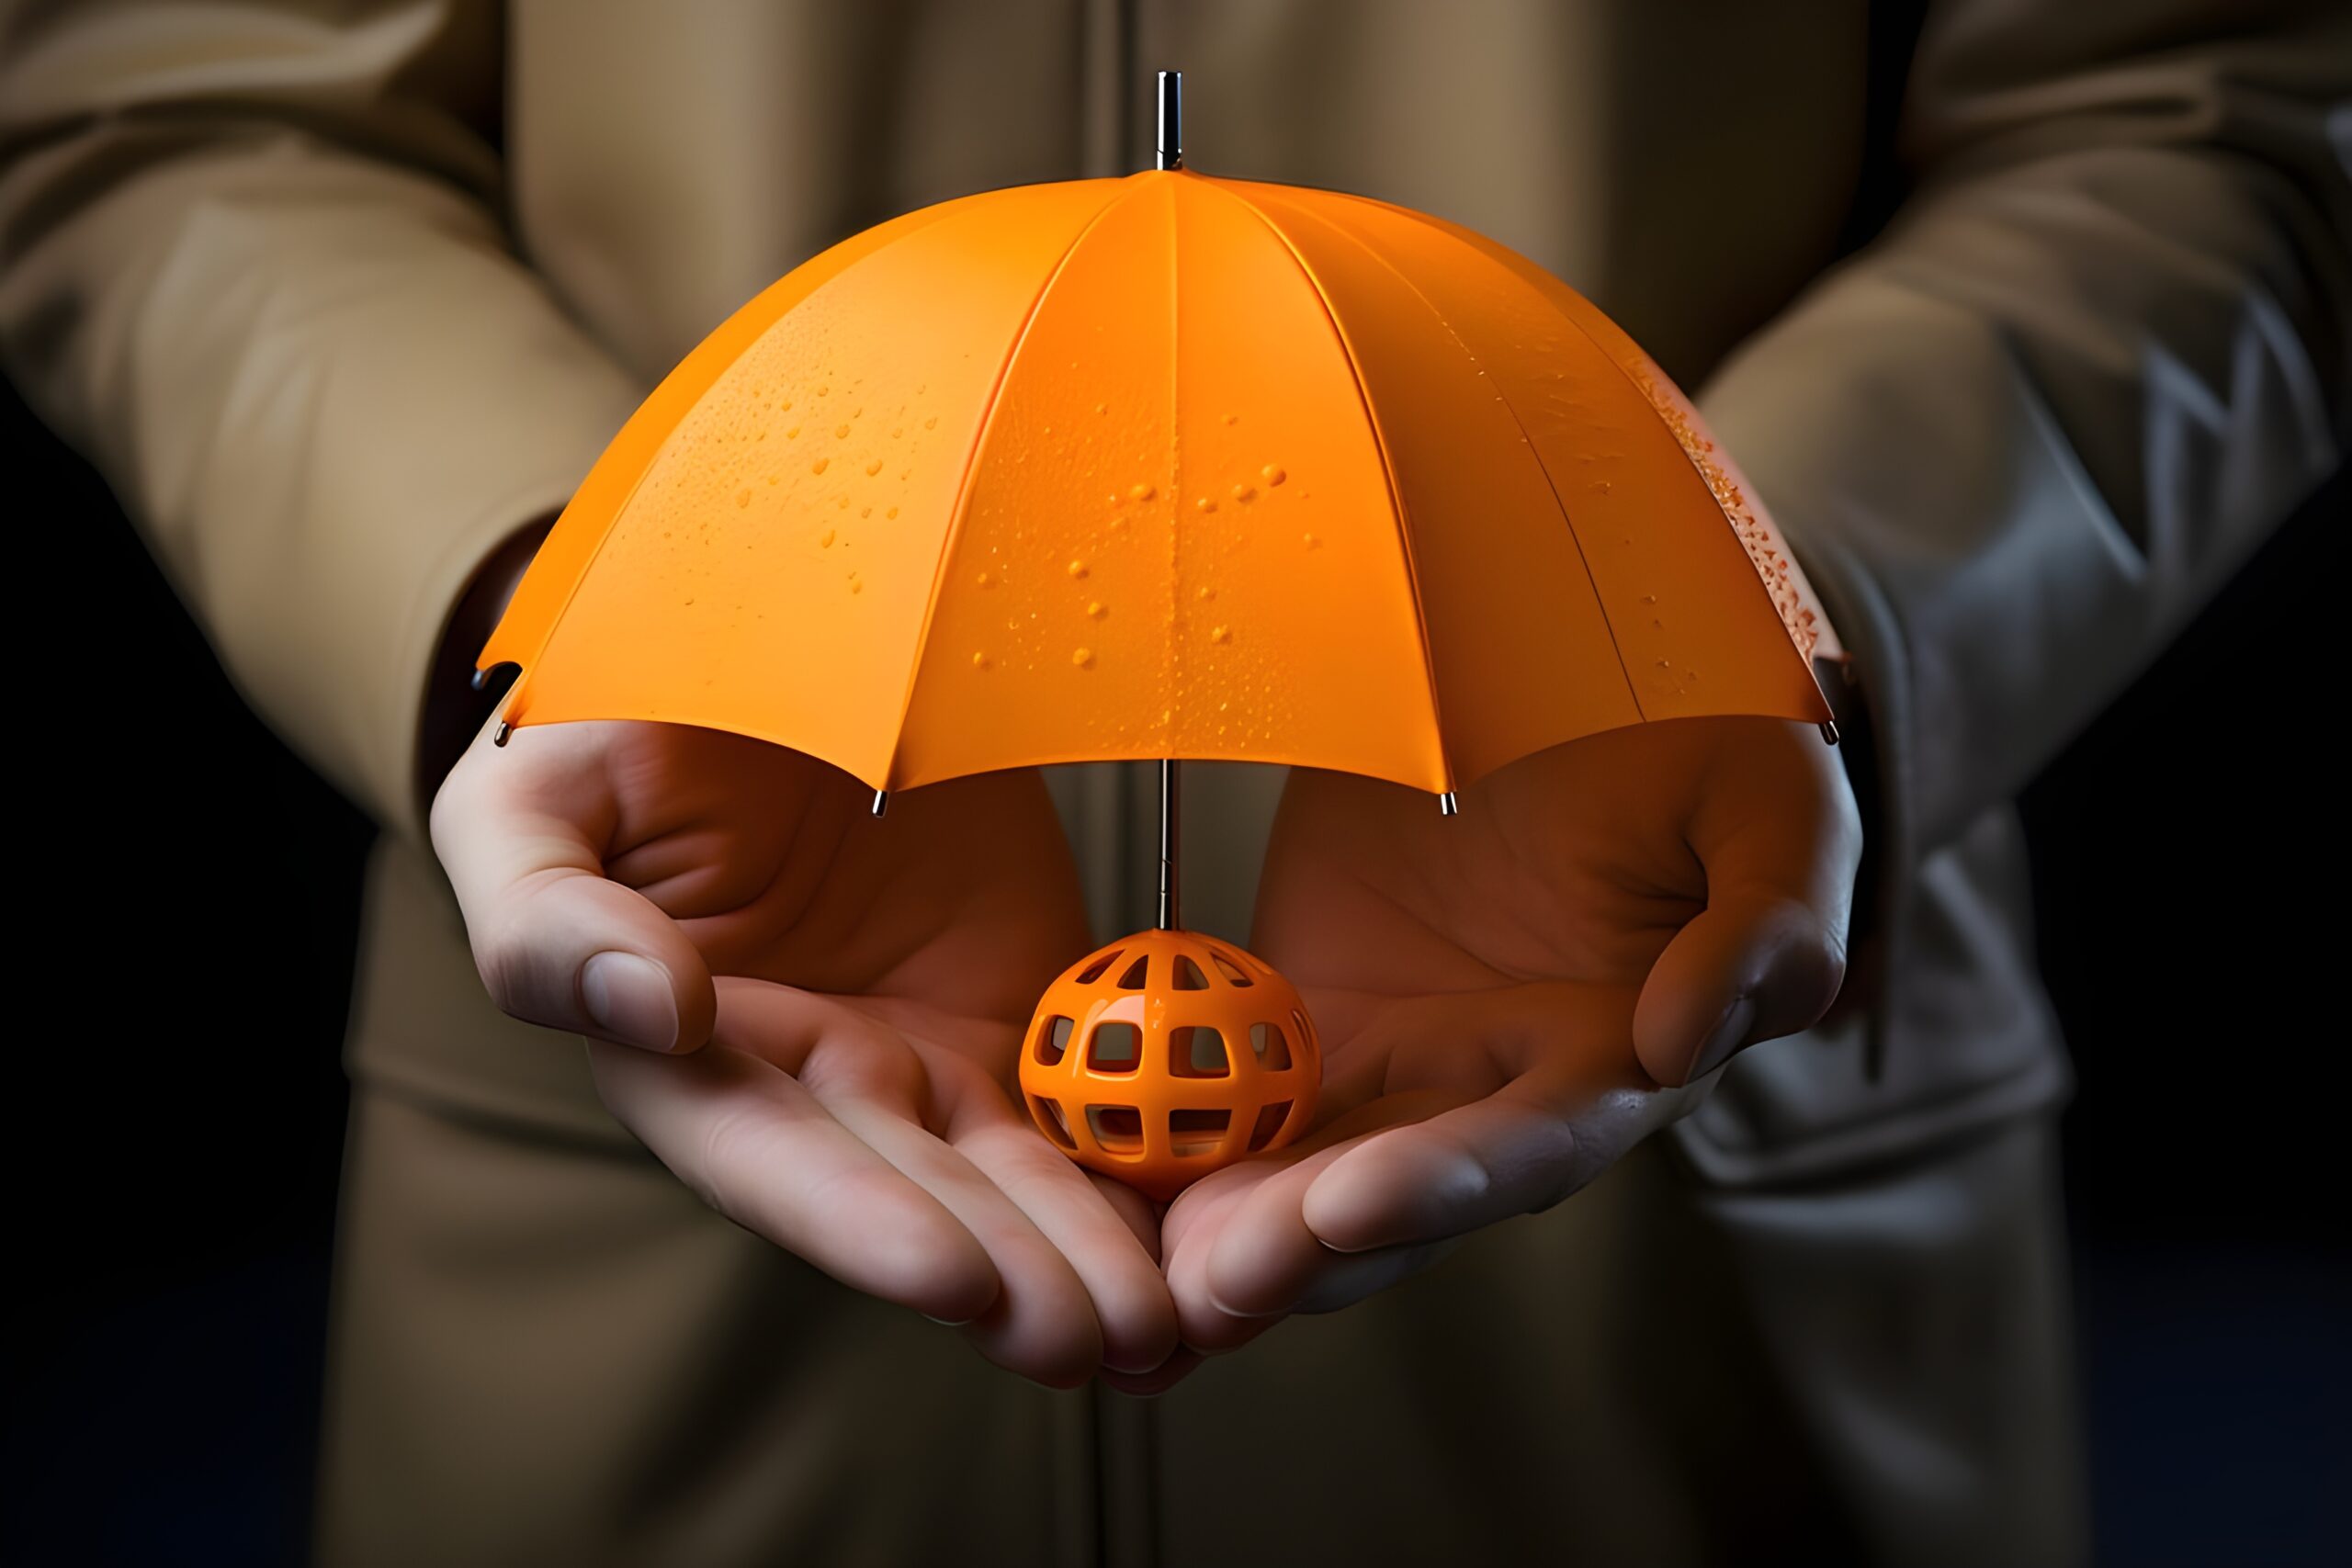 insurance-umbrella-orange-symbolizes-protection-family-car-home_1105660-425 (2)